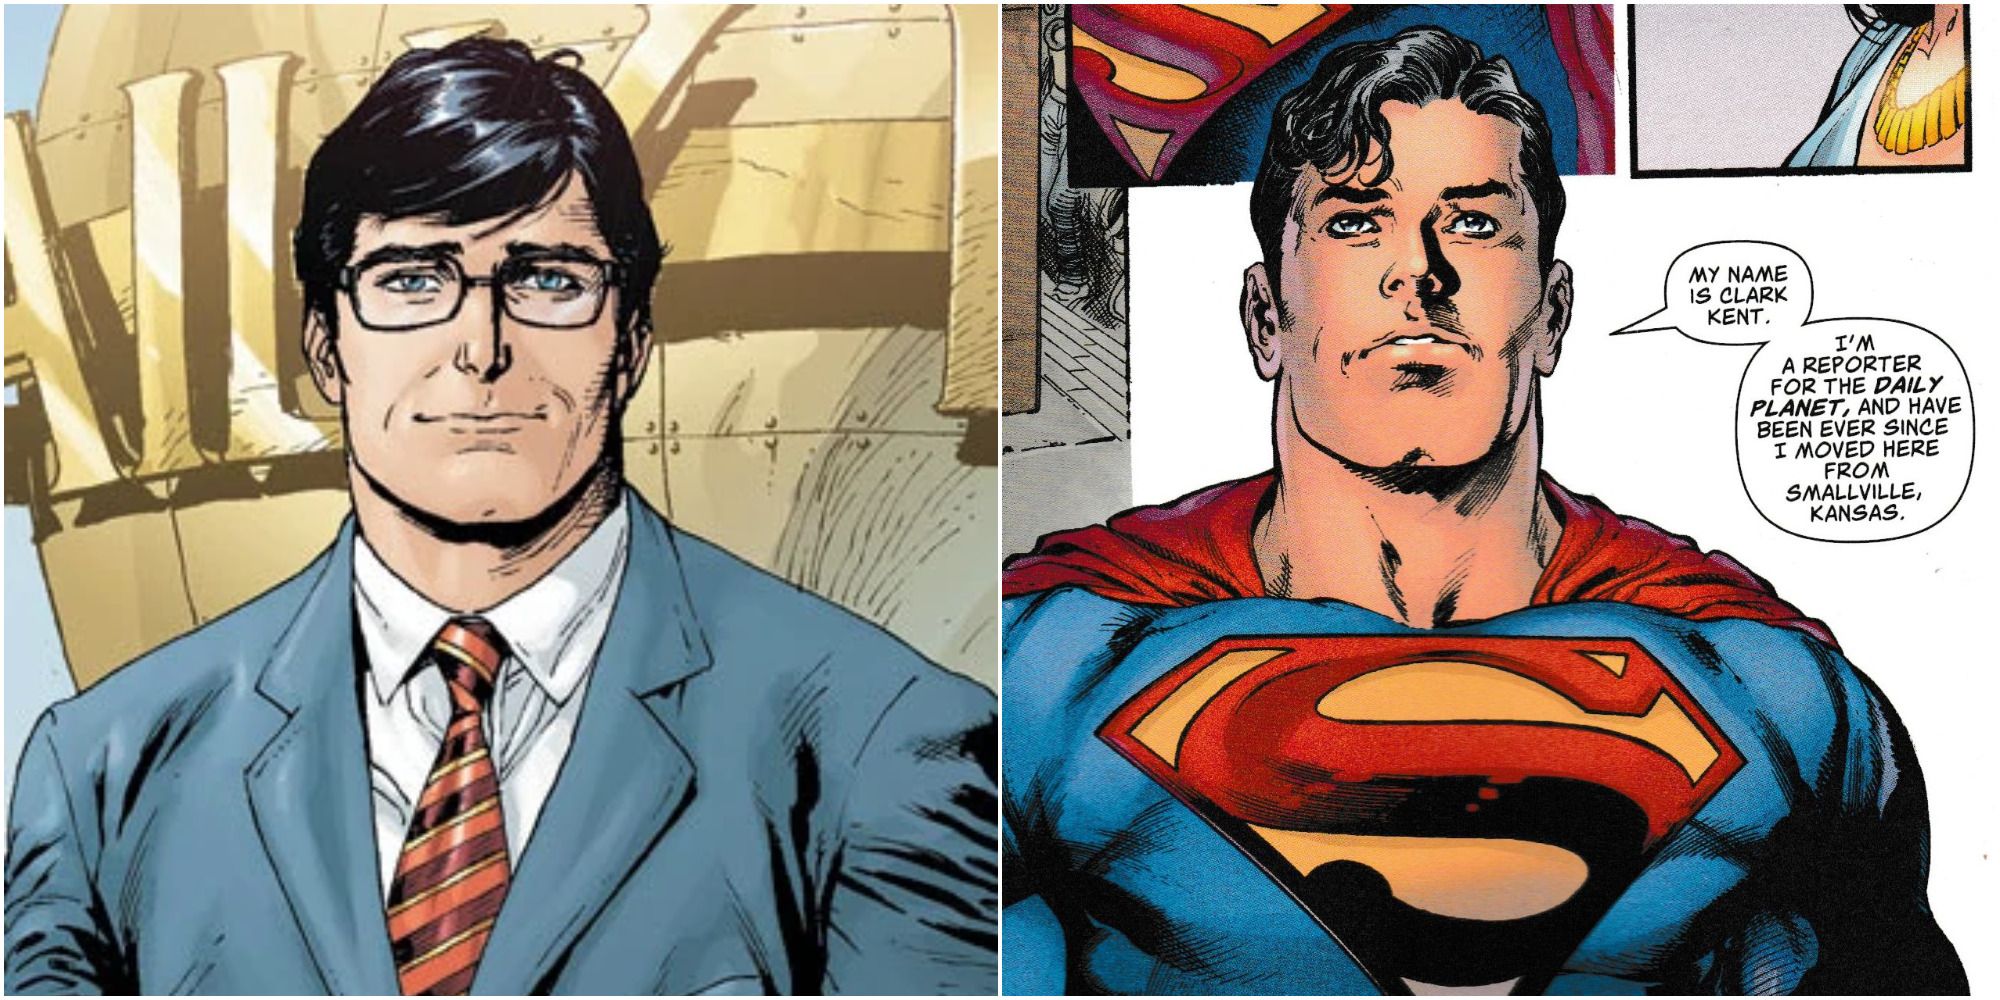 Clark Kent and Superman